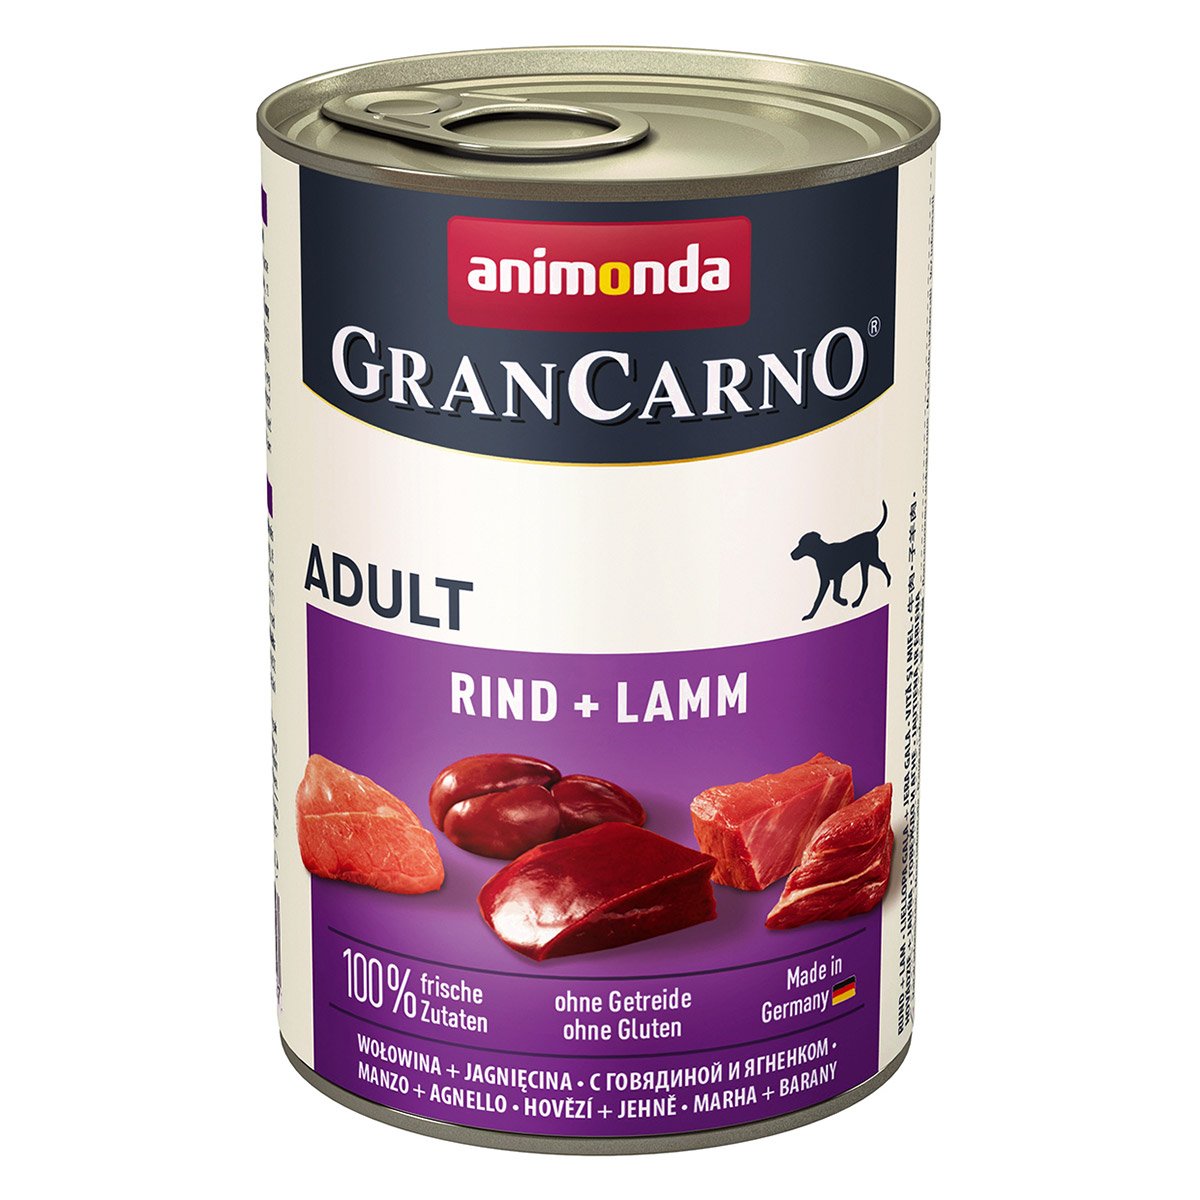 animonda GranCarno Adult Rind und Lamm 6x400g von animonda GranCarno